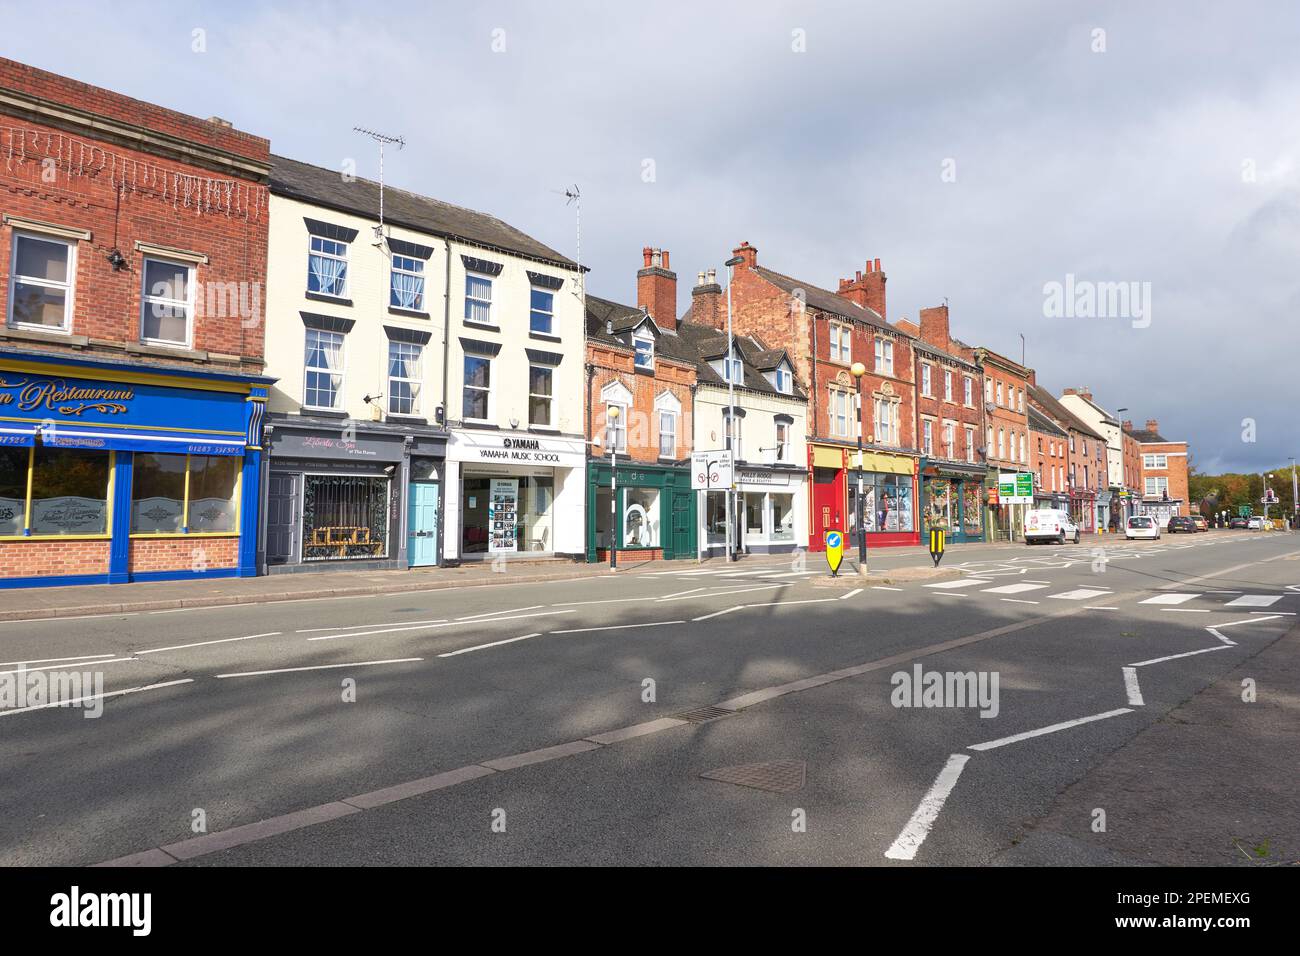 Quiet high street scene in Burton on Trent, UK Stock Photo